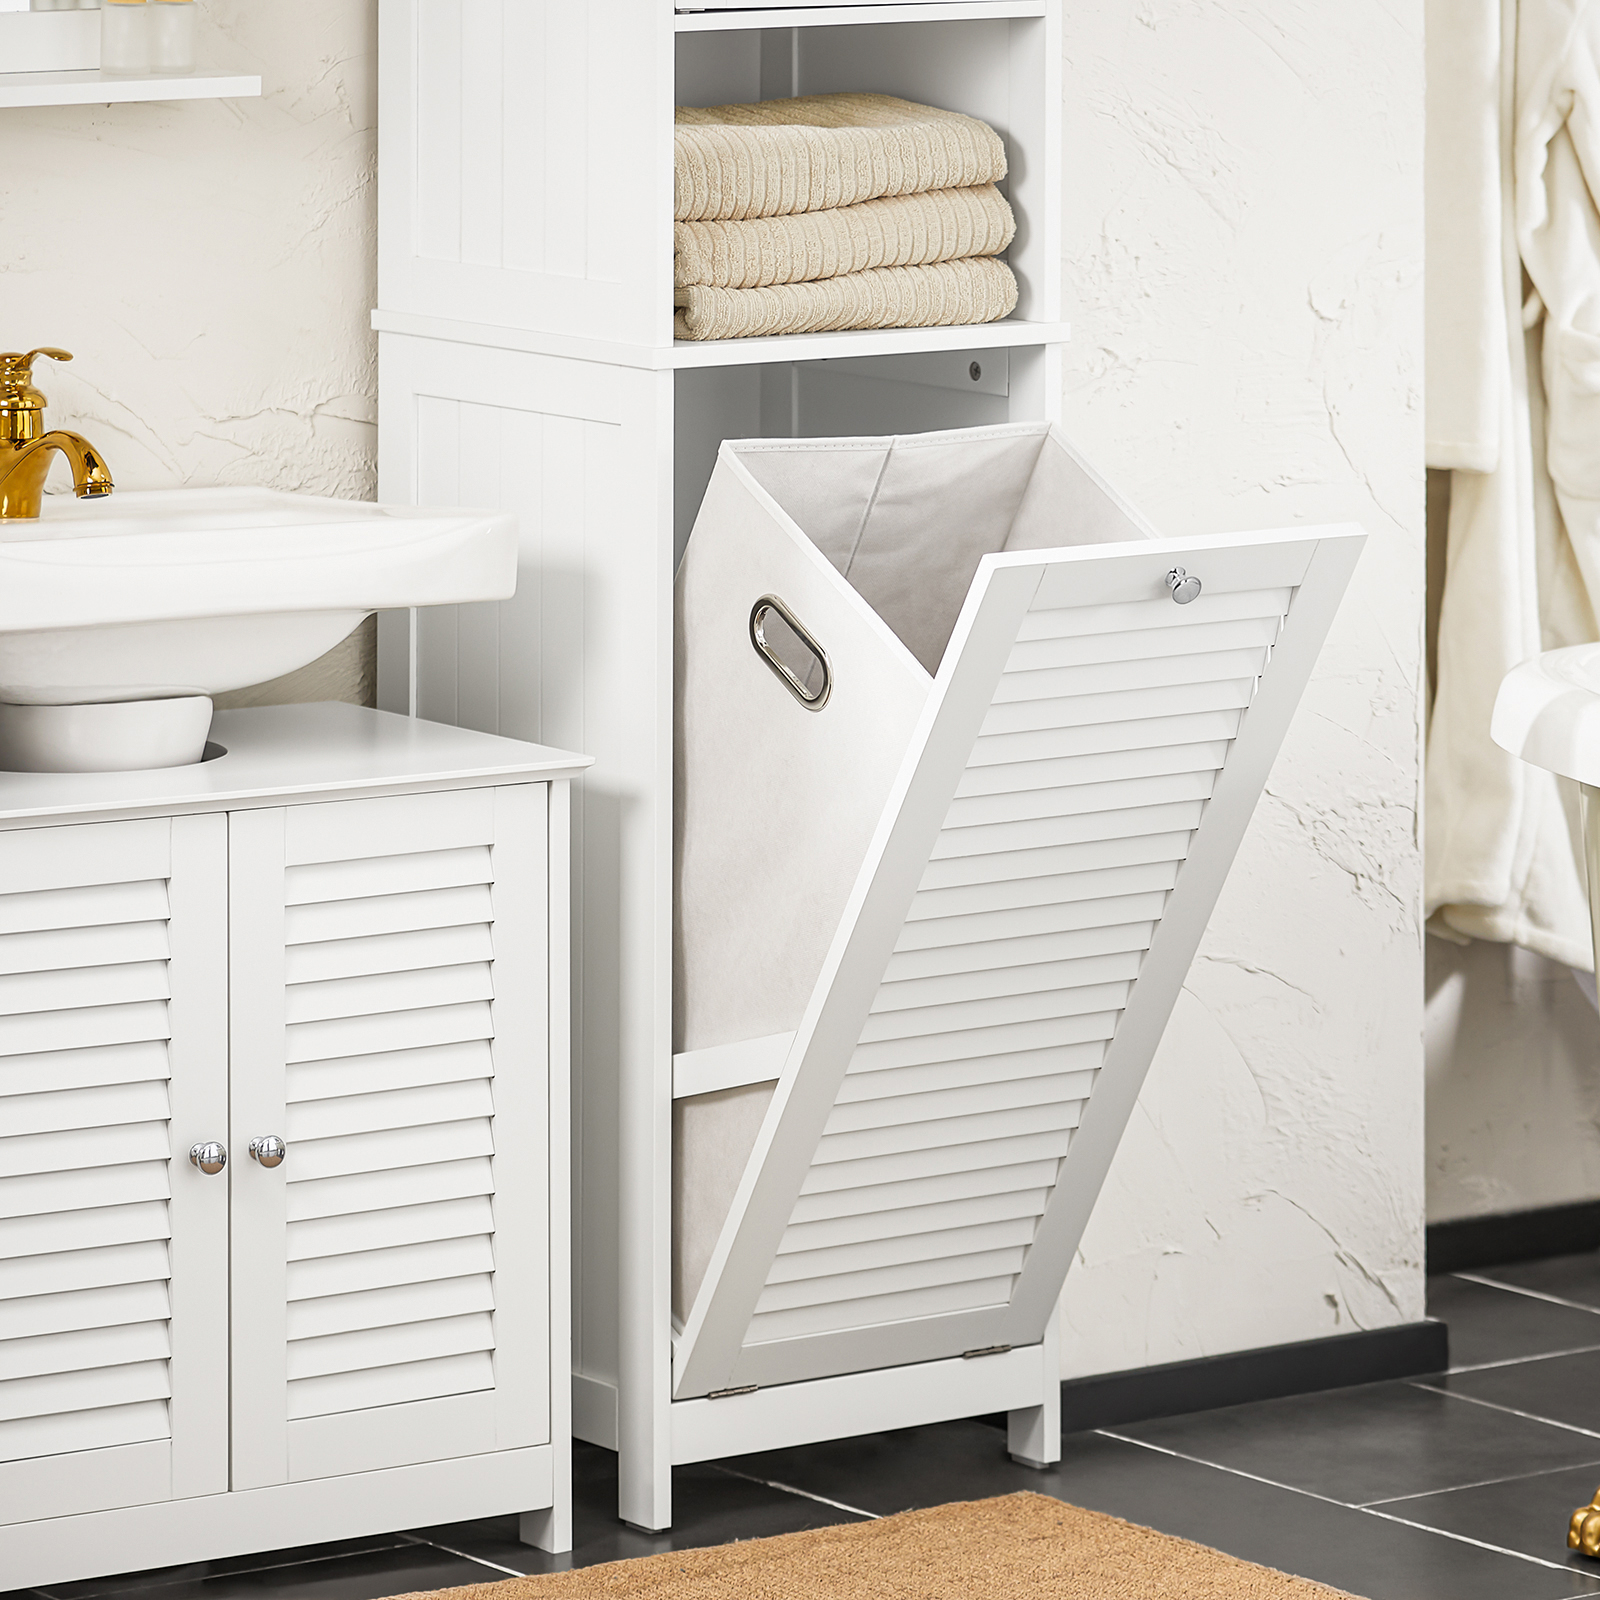 SoBuy BZR124-W Bathroom Tall Cabinet Cupboard Storage Cabinet With Laundry Basket